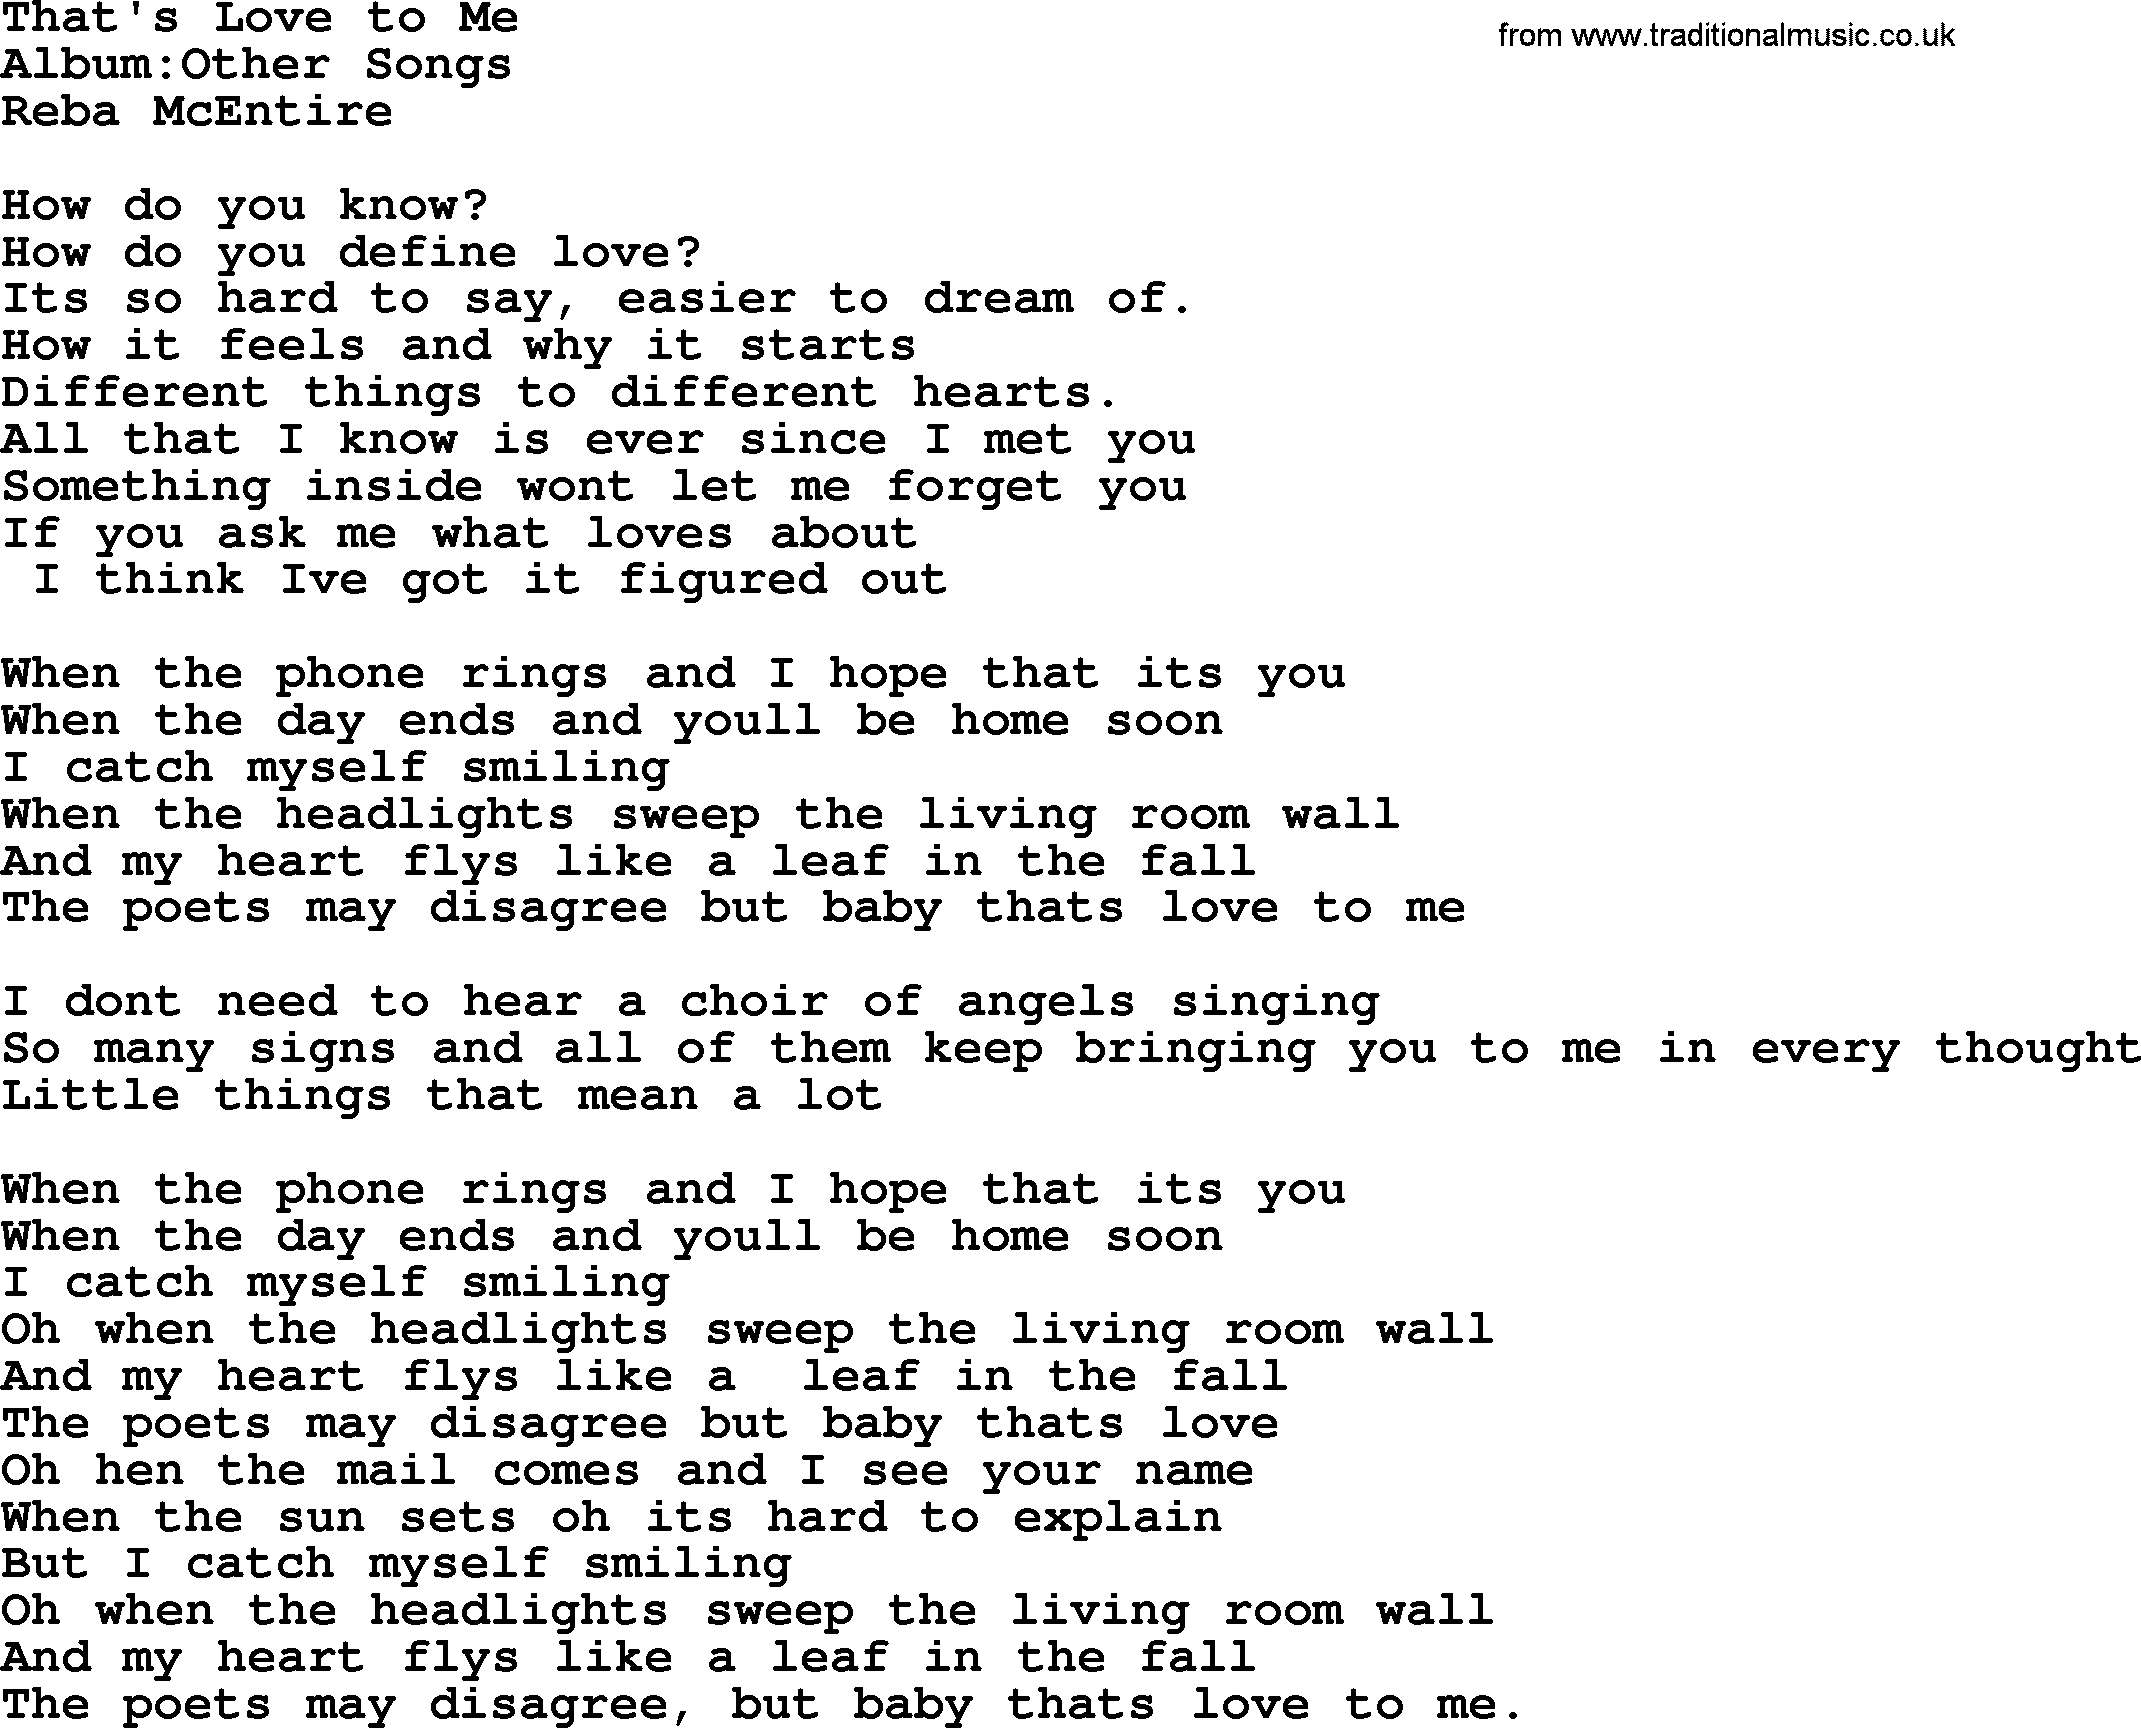 Reba McEntire song: That's Love to Me lyrics